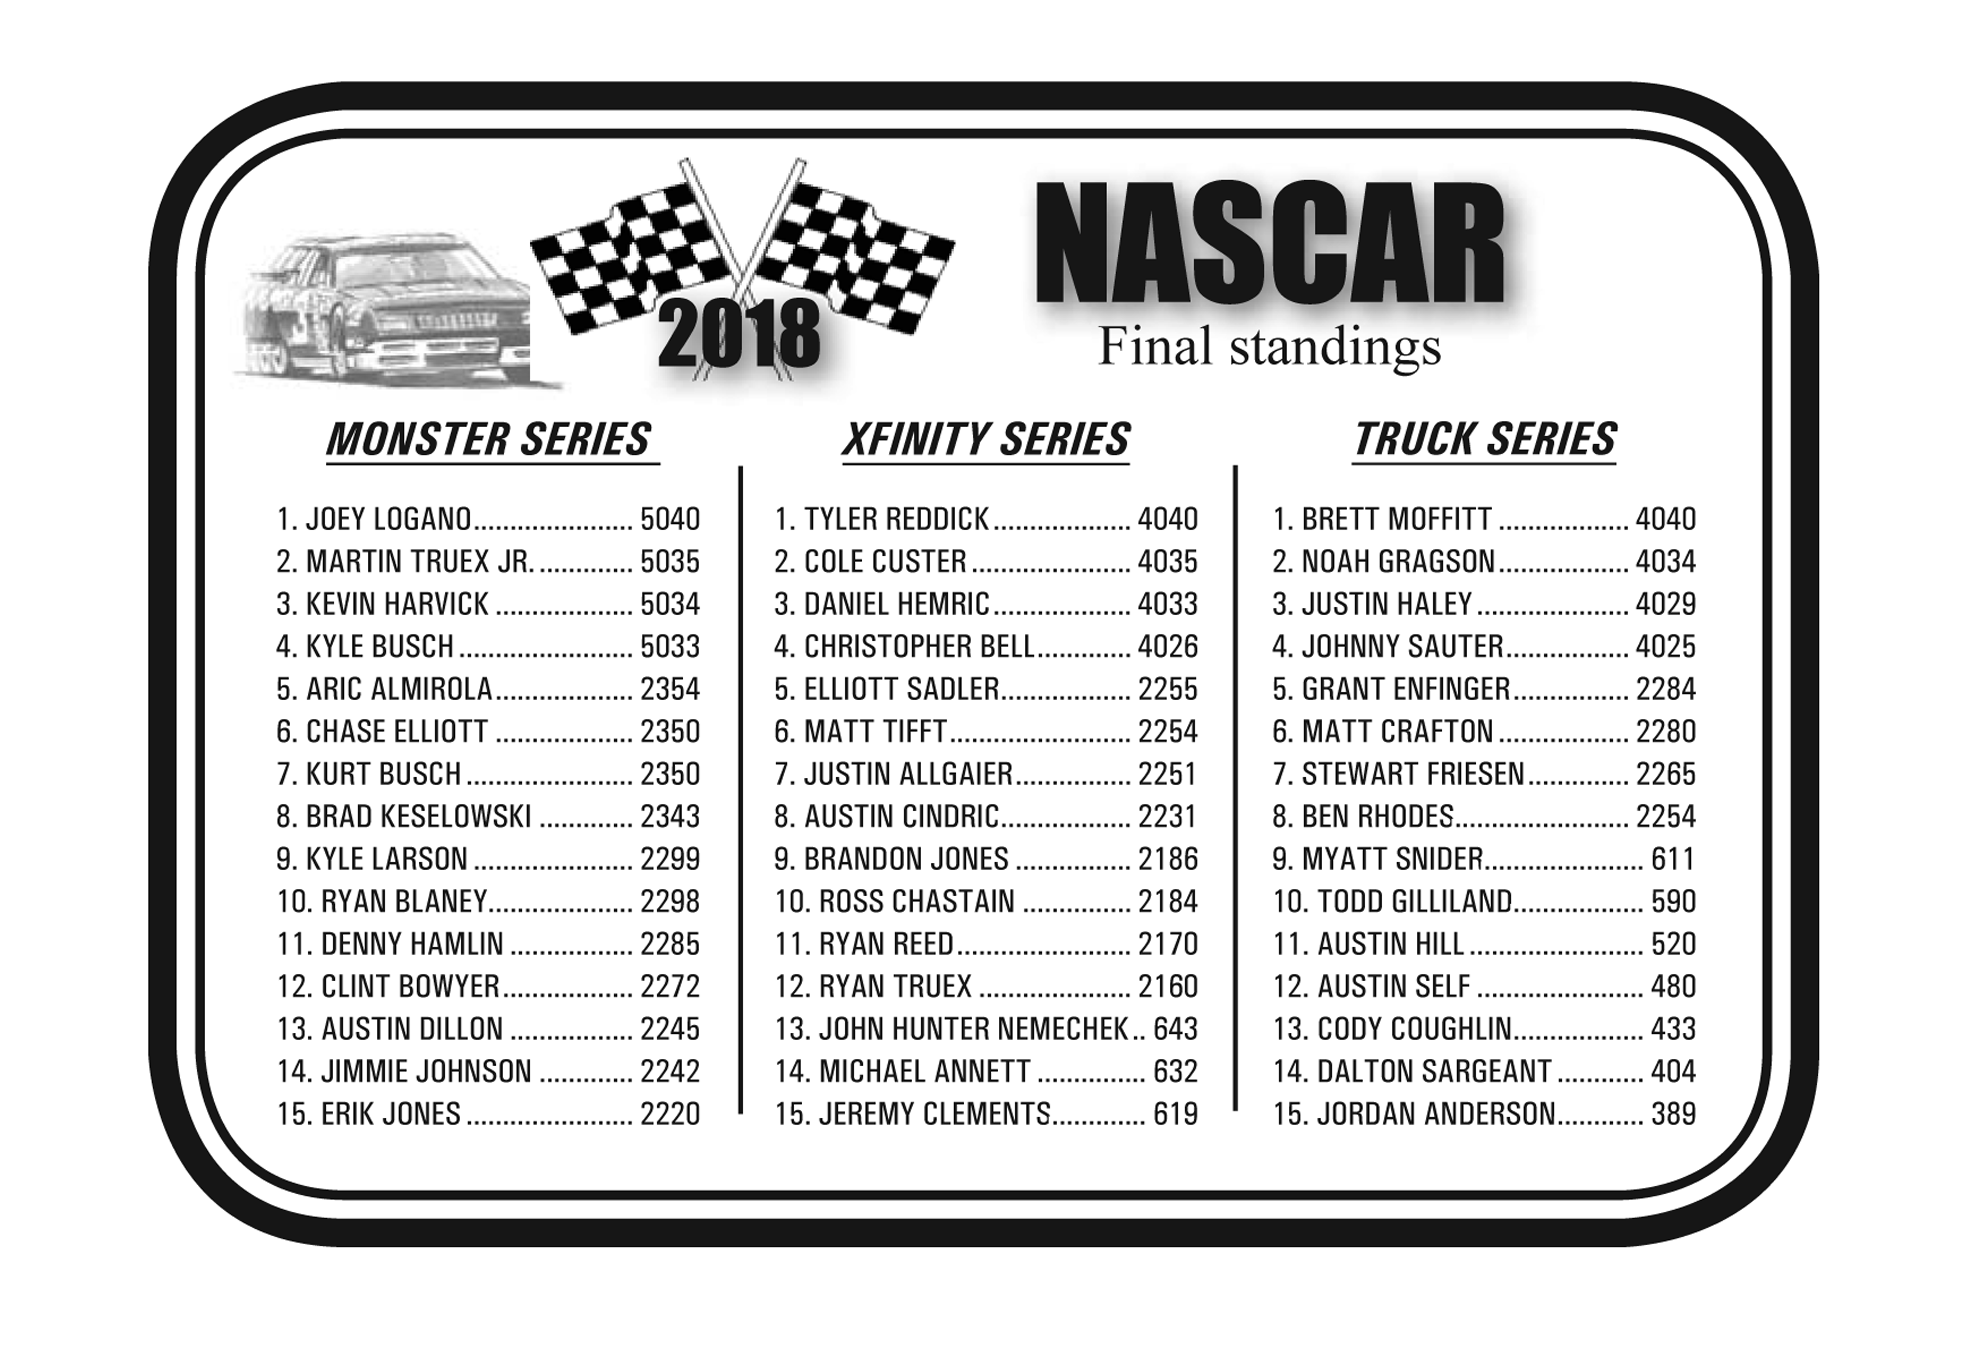 NASCAR Standings Through November 19, 2018